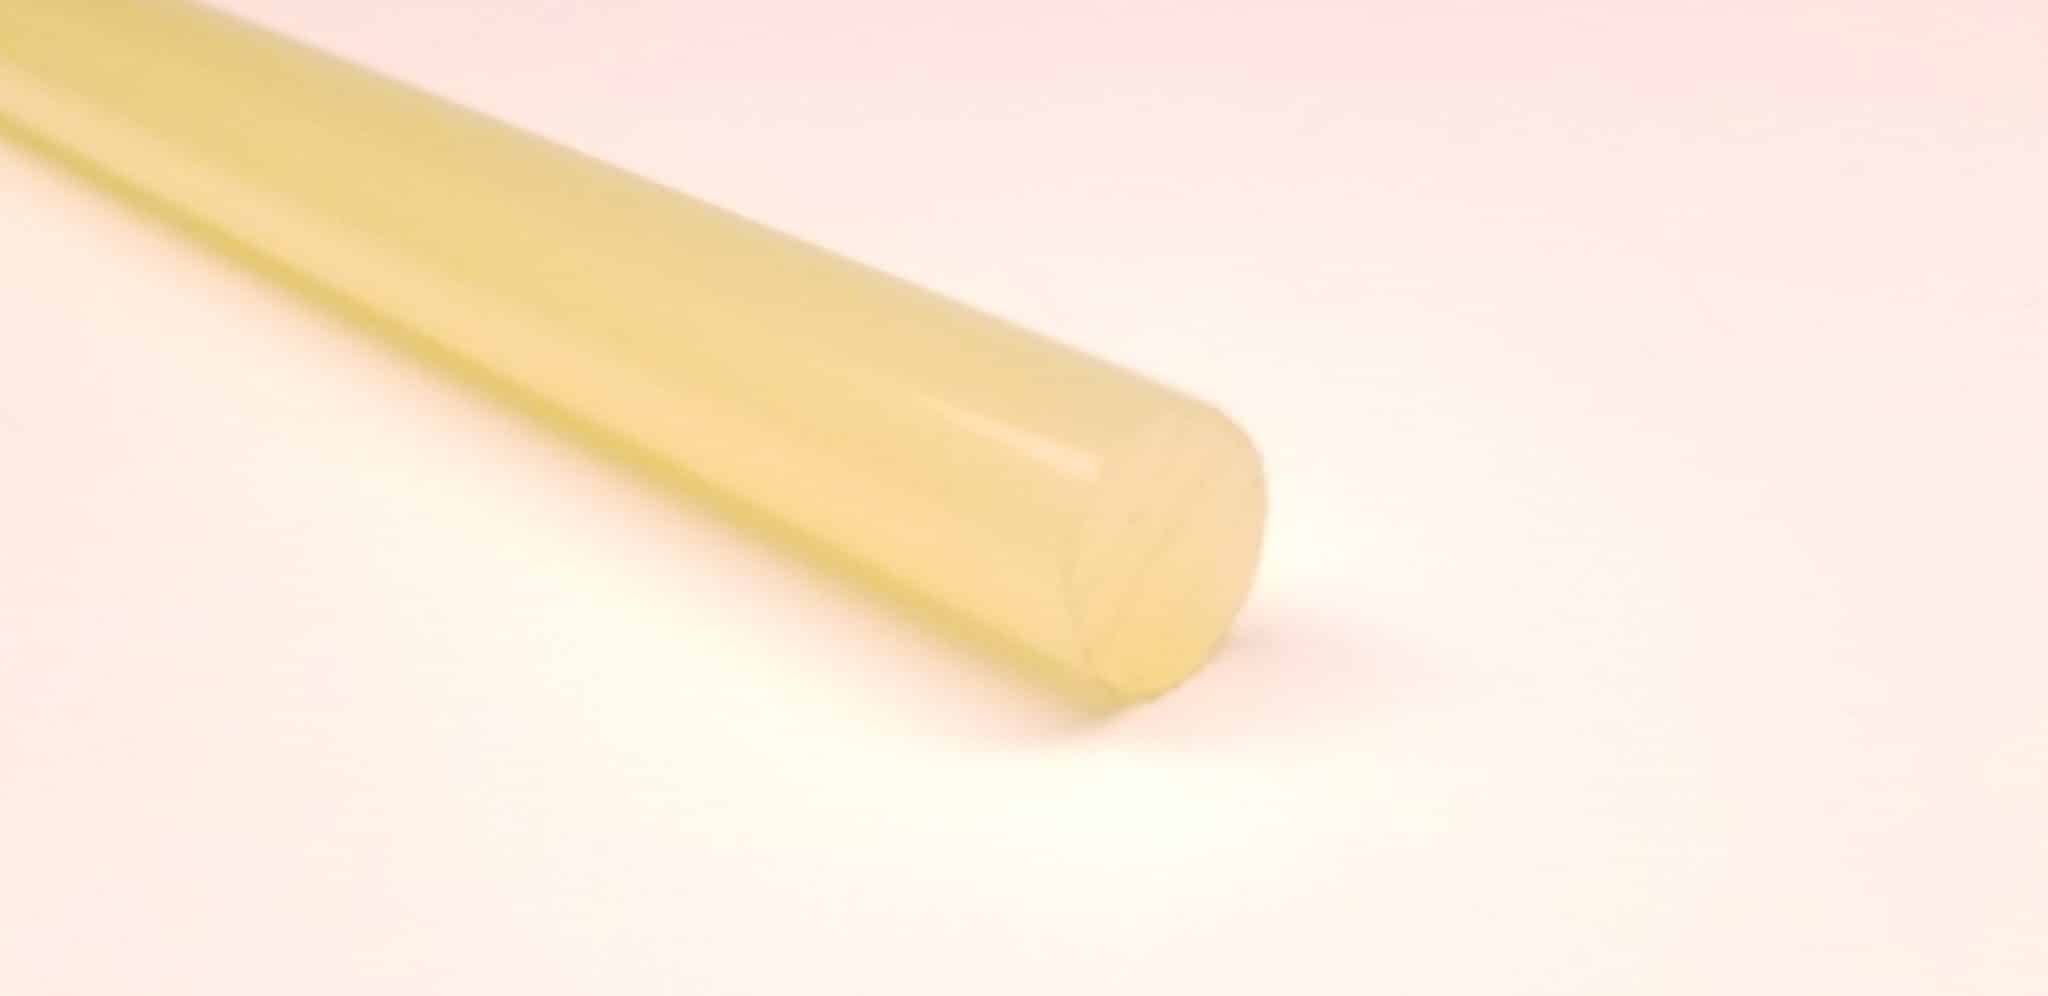 Quick Stick Hot Melt Glue - Stick or Slug